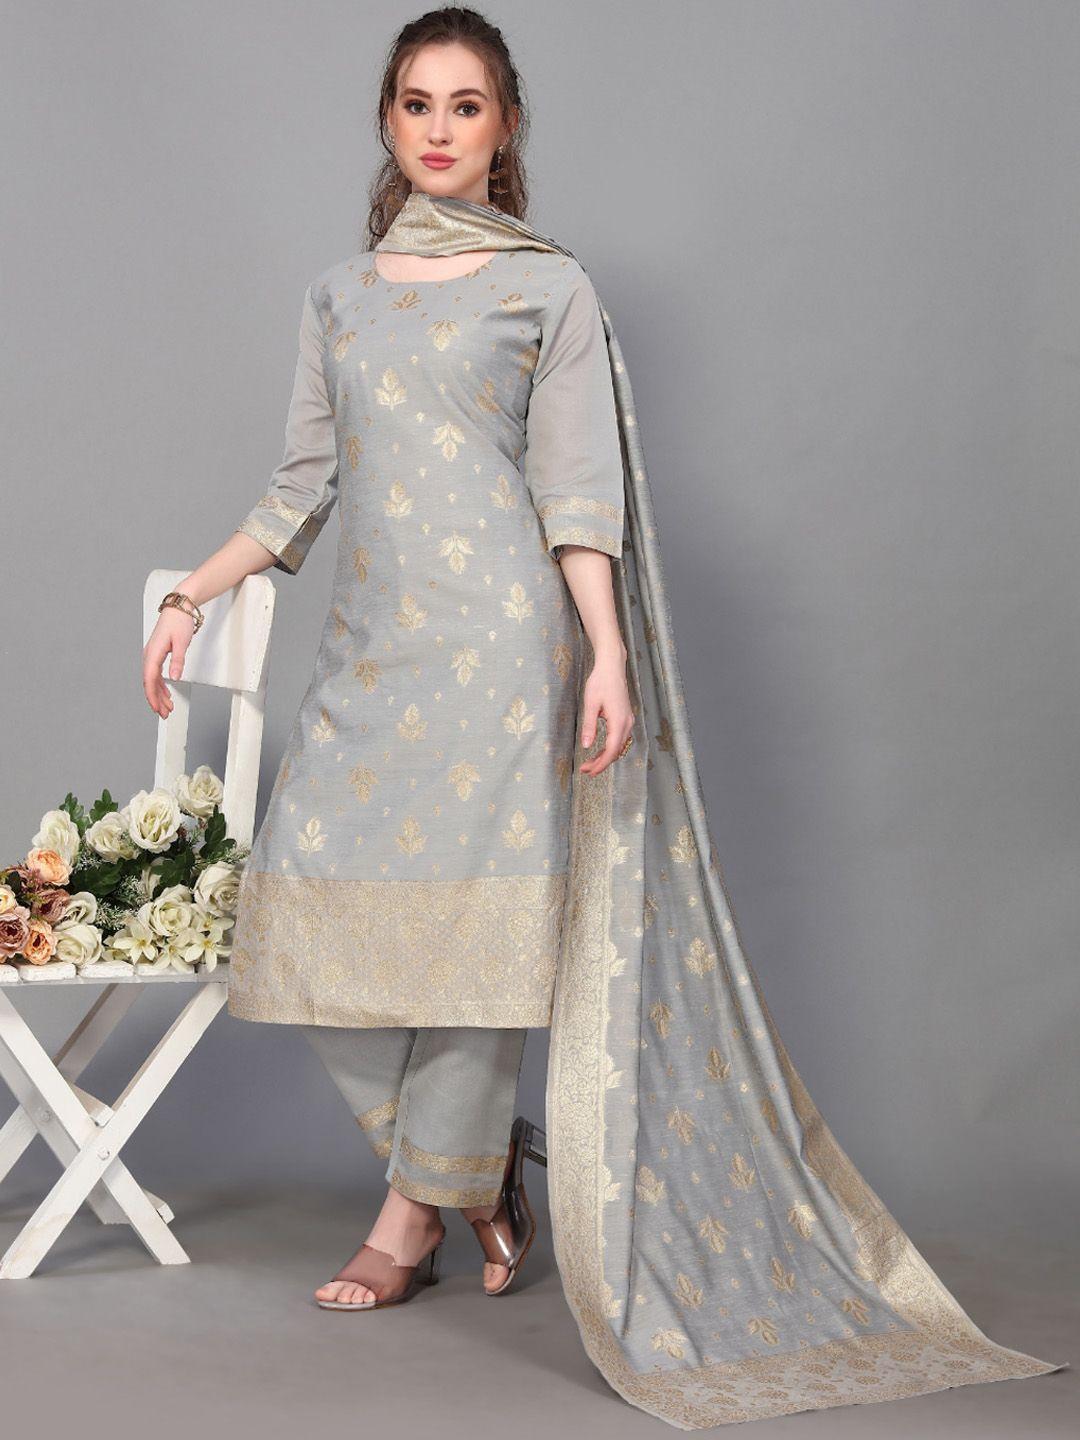 happy design etnic motifs woven design pure cotton kurta with trousers & dupatta